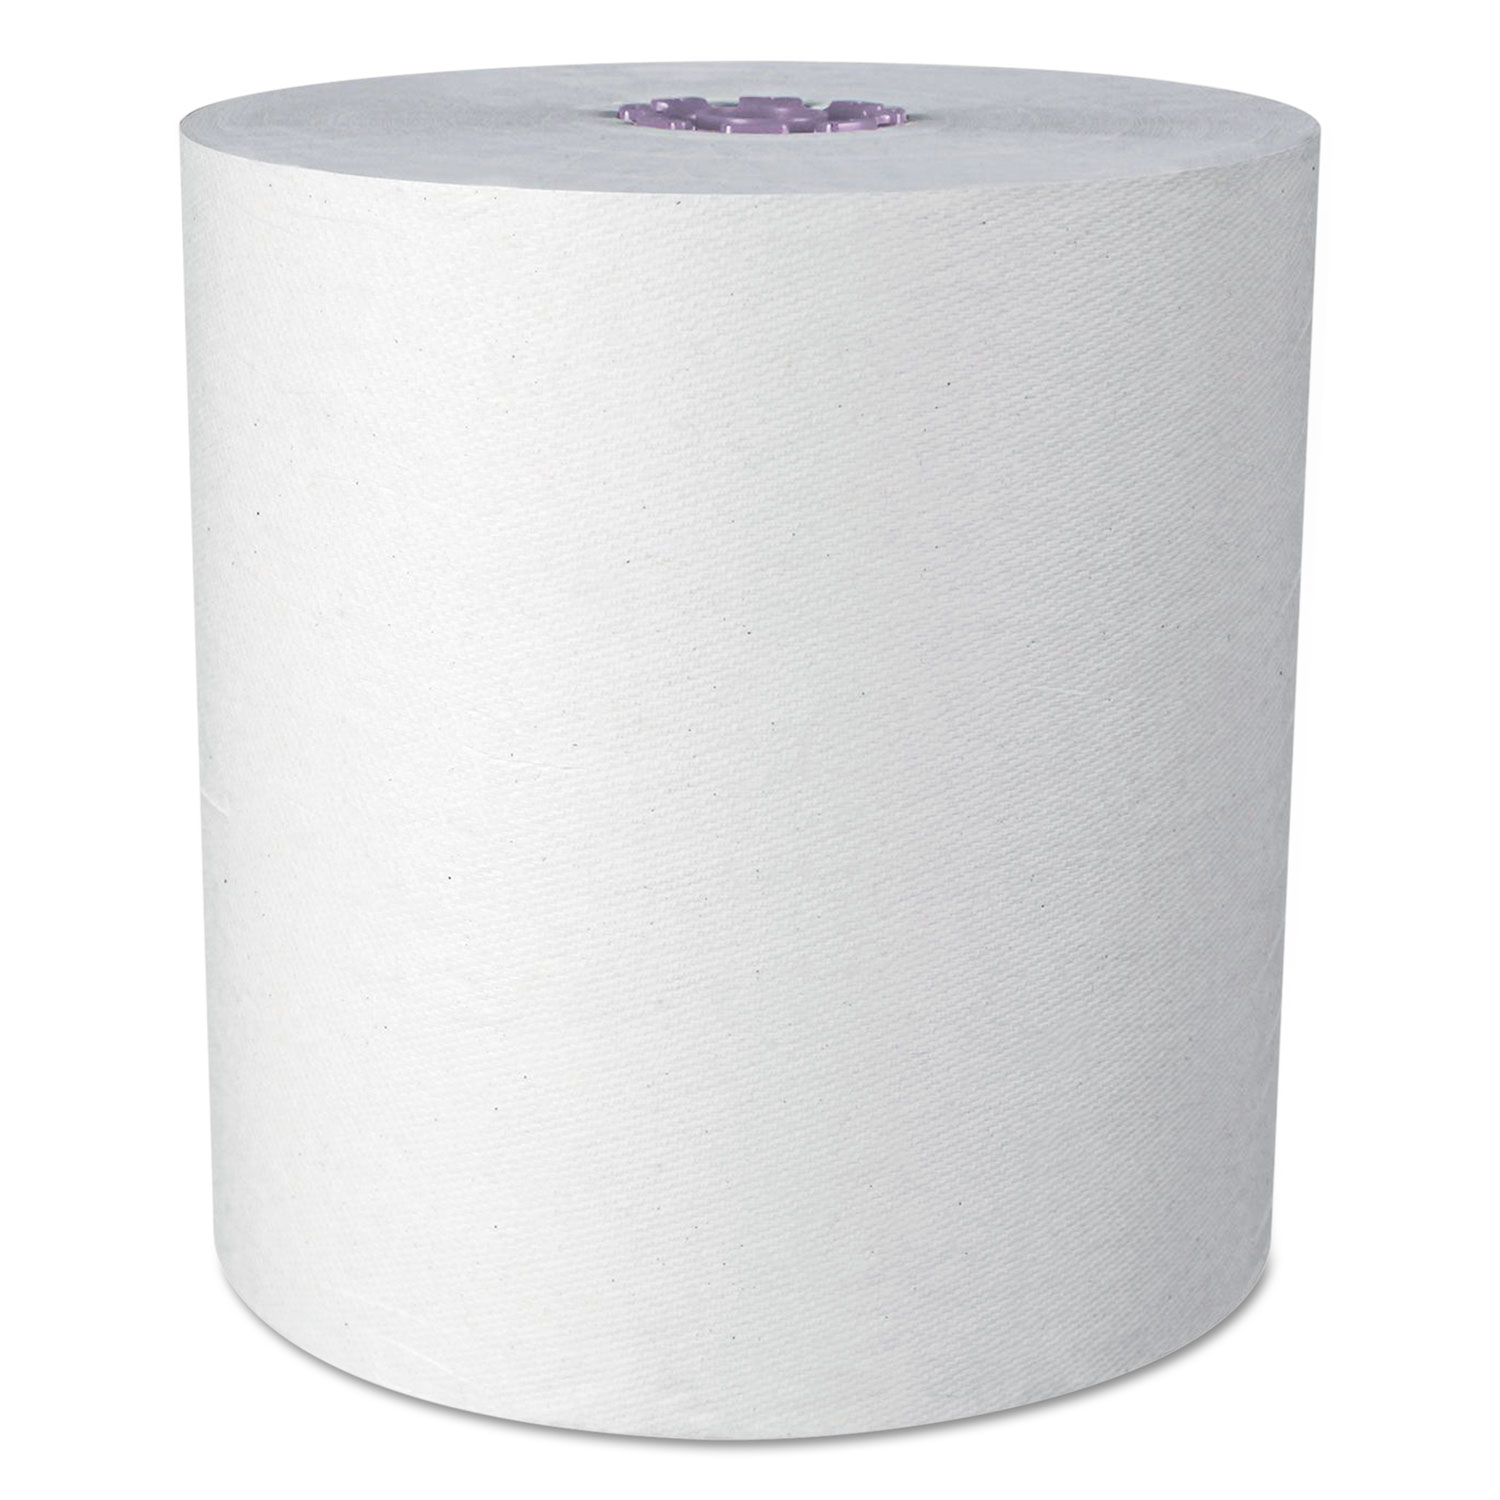 Hard Roll Towels, White, 8 x 950 ft, 6 Rolls/Carton